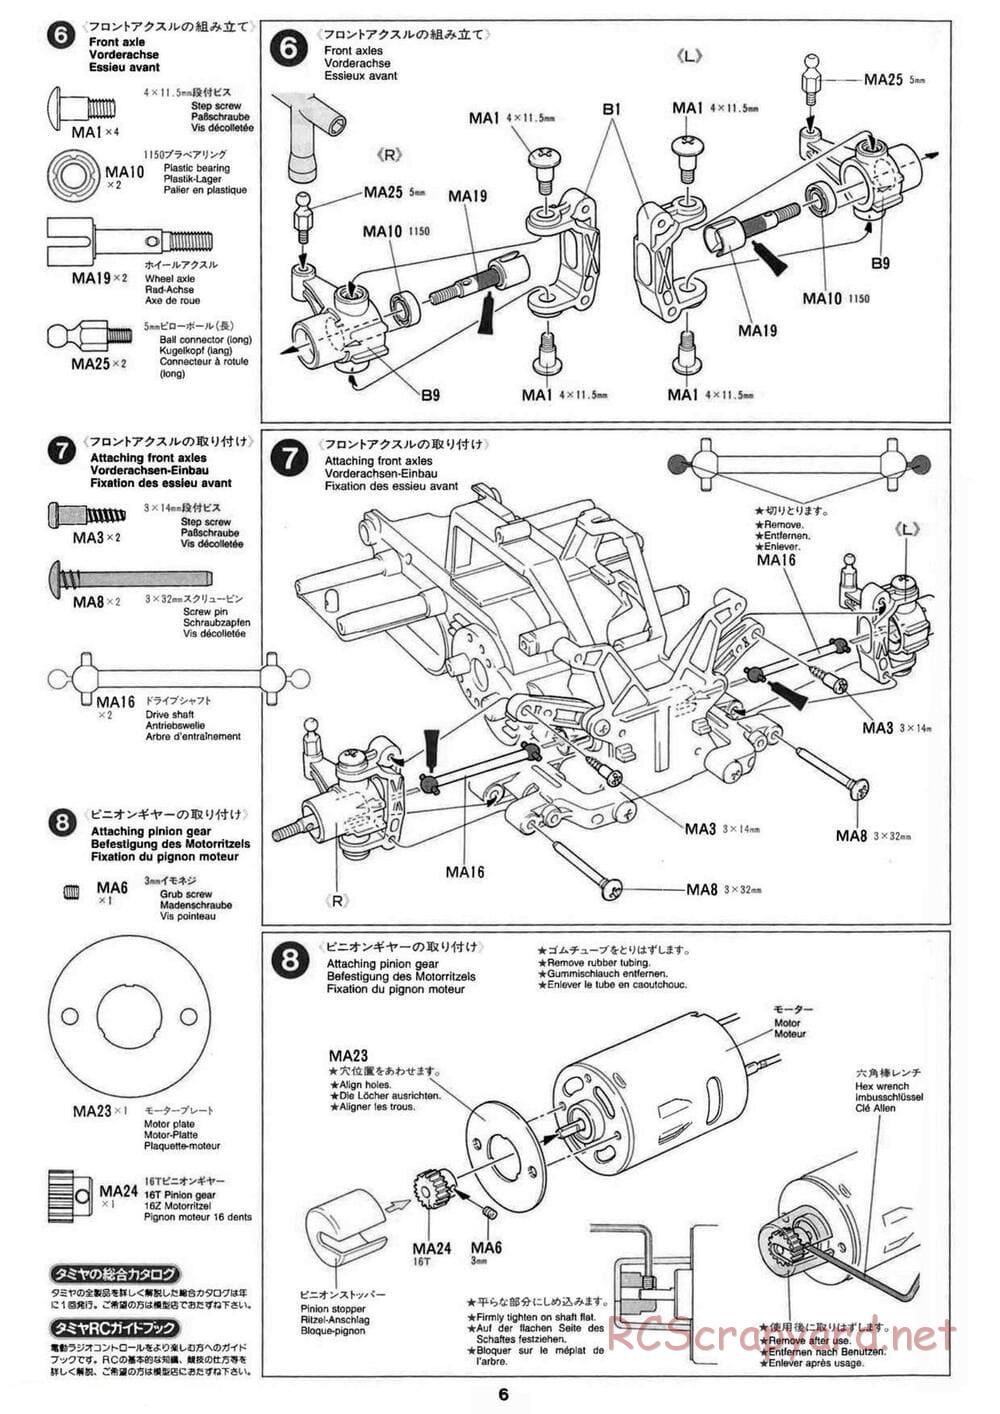 Tamiya - Peugeot 306 Maxi WRC - FF-02 Chassis - Manual - Page 6